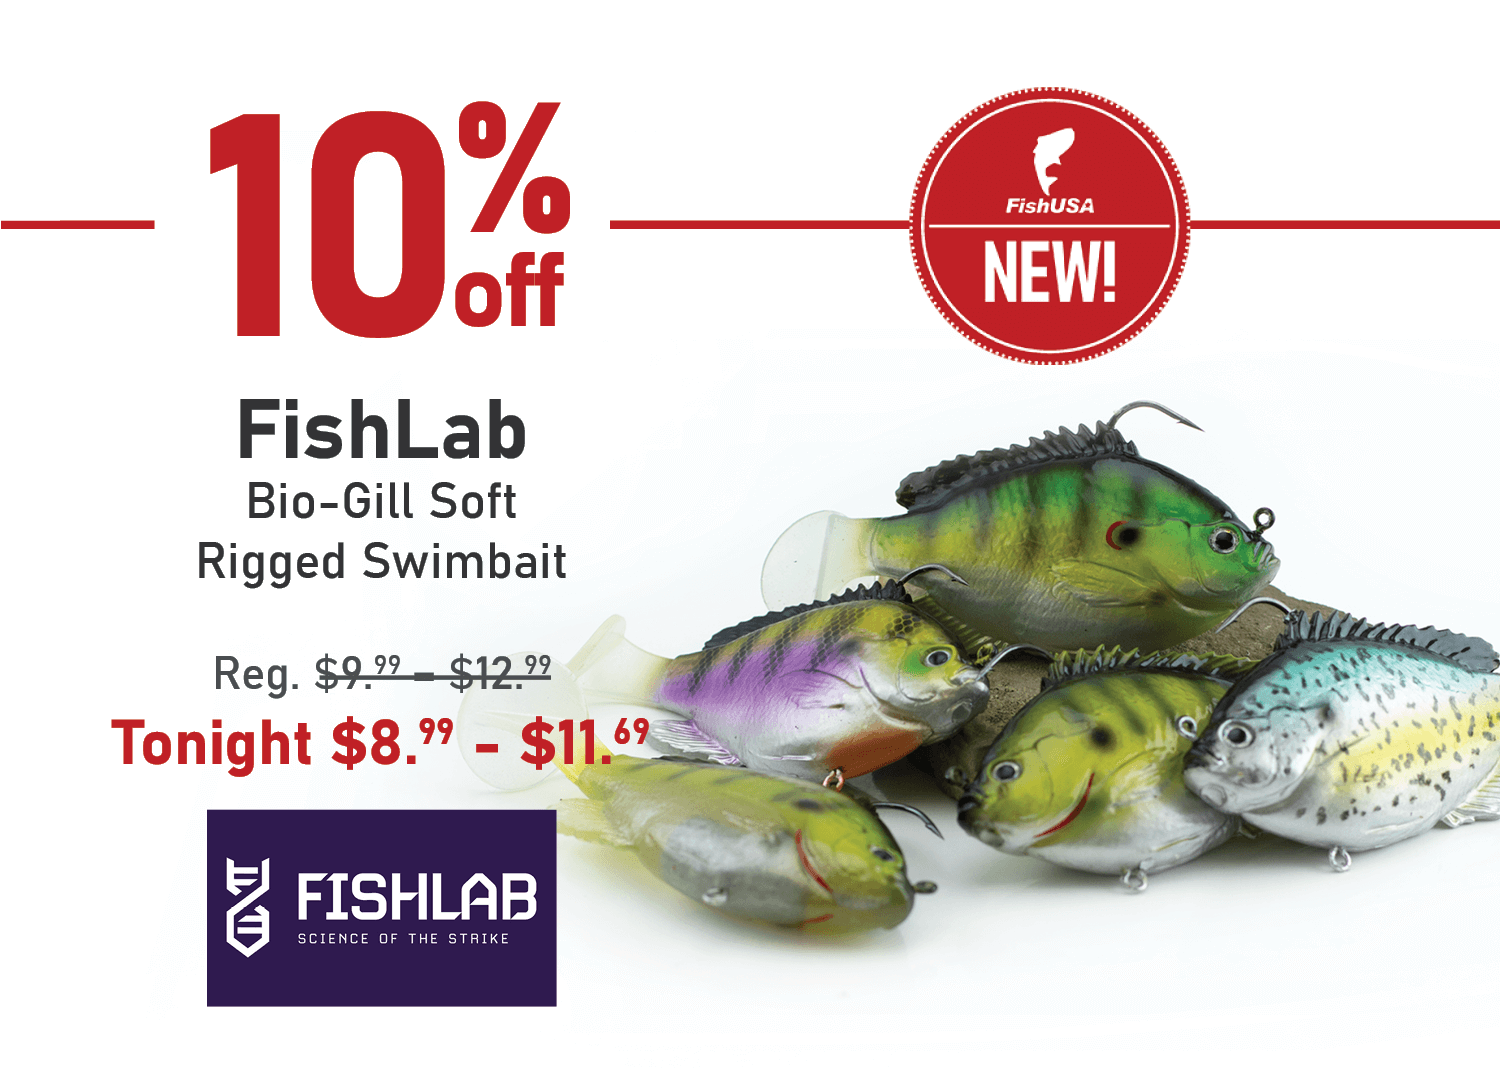 Save 10% on the FishLab Bio-Gill Soft Rigged Swimbait